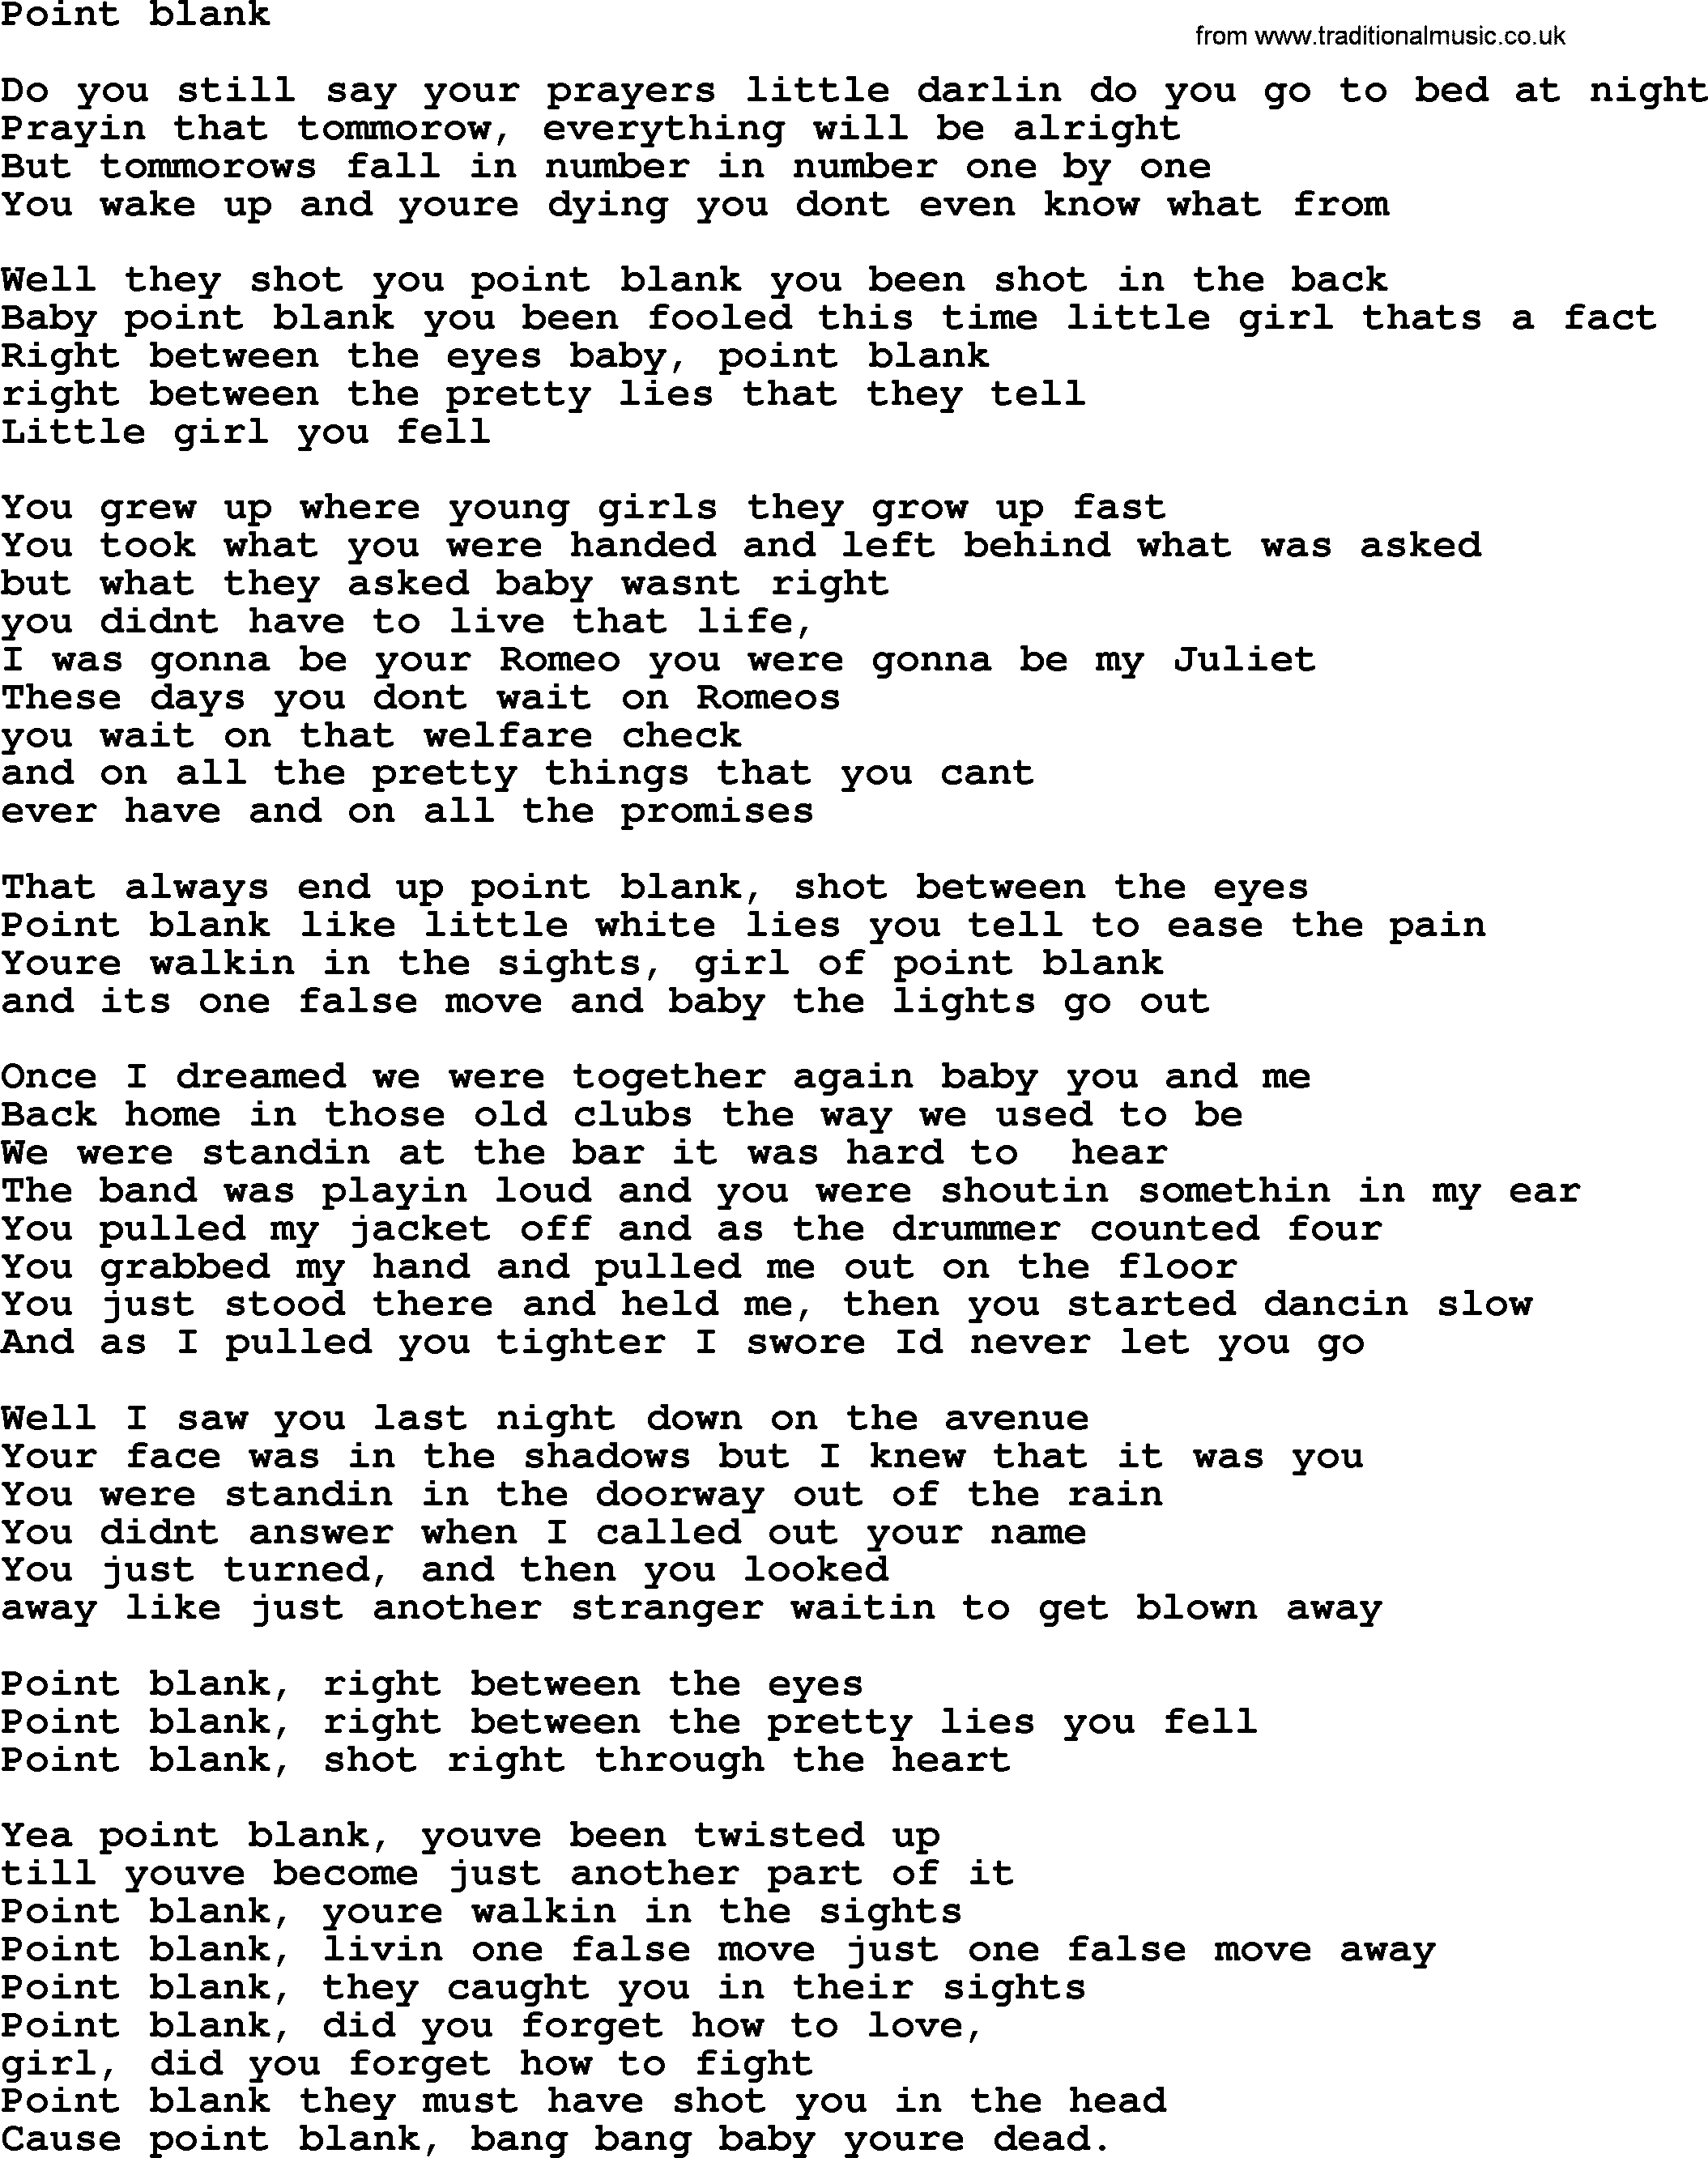 Bruce Springsteen song: Point Blank lyrics